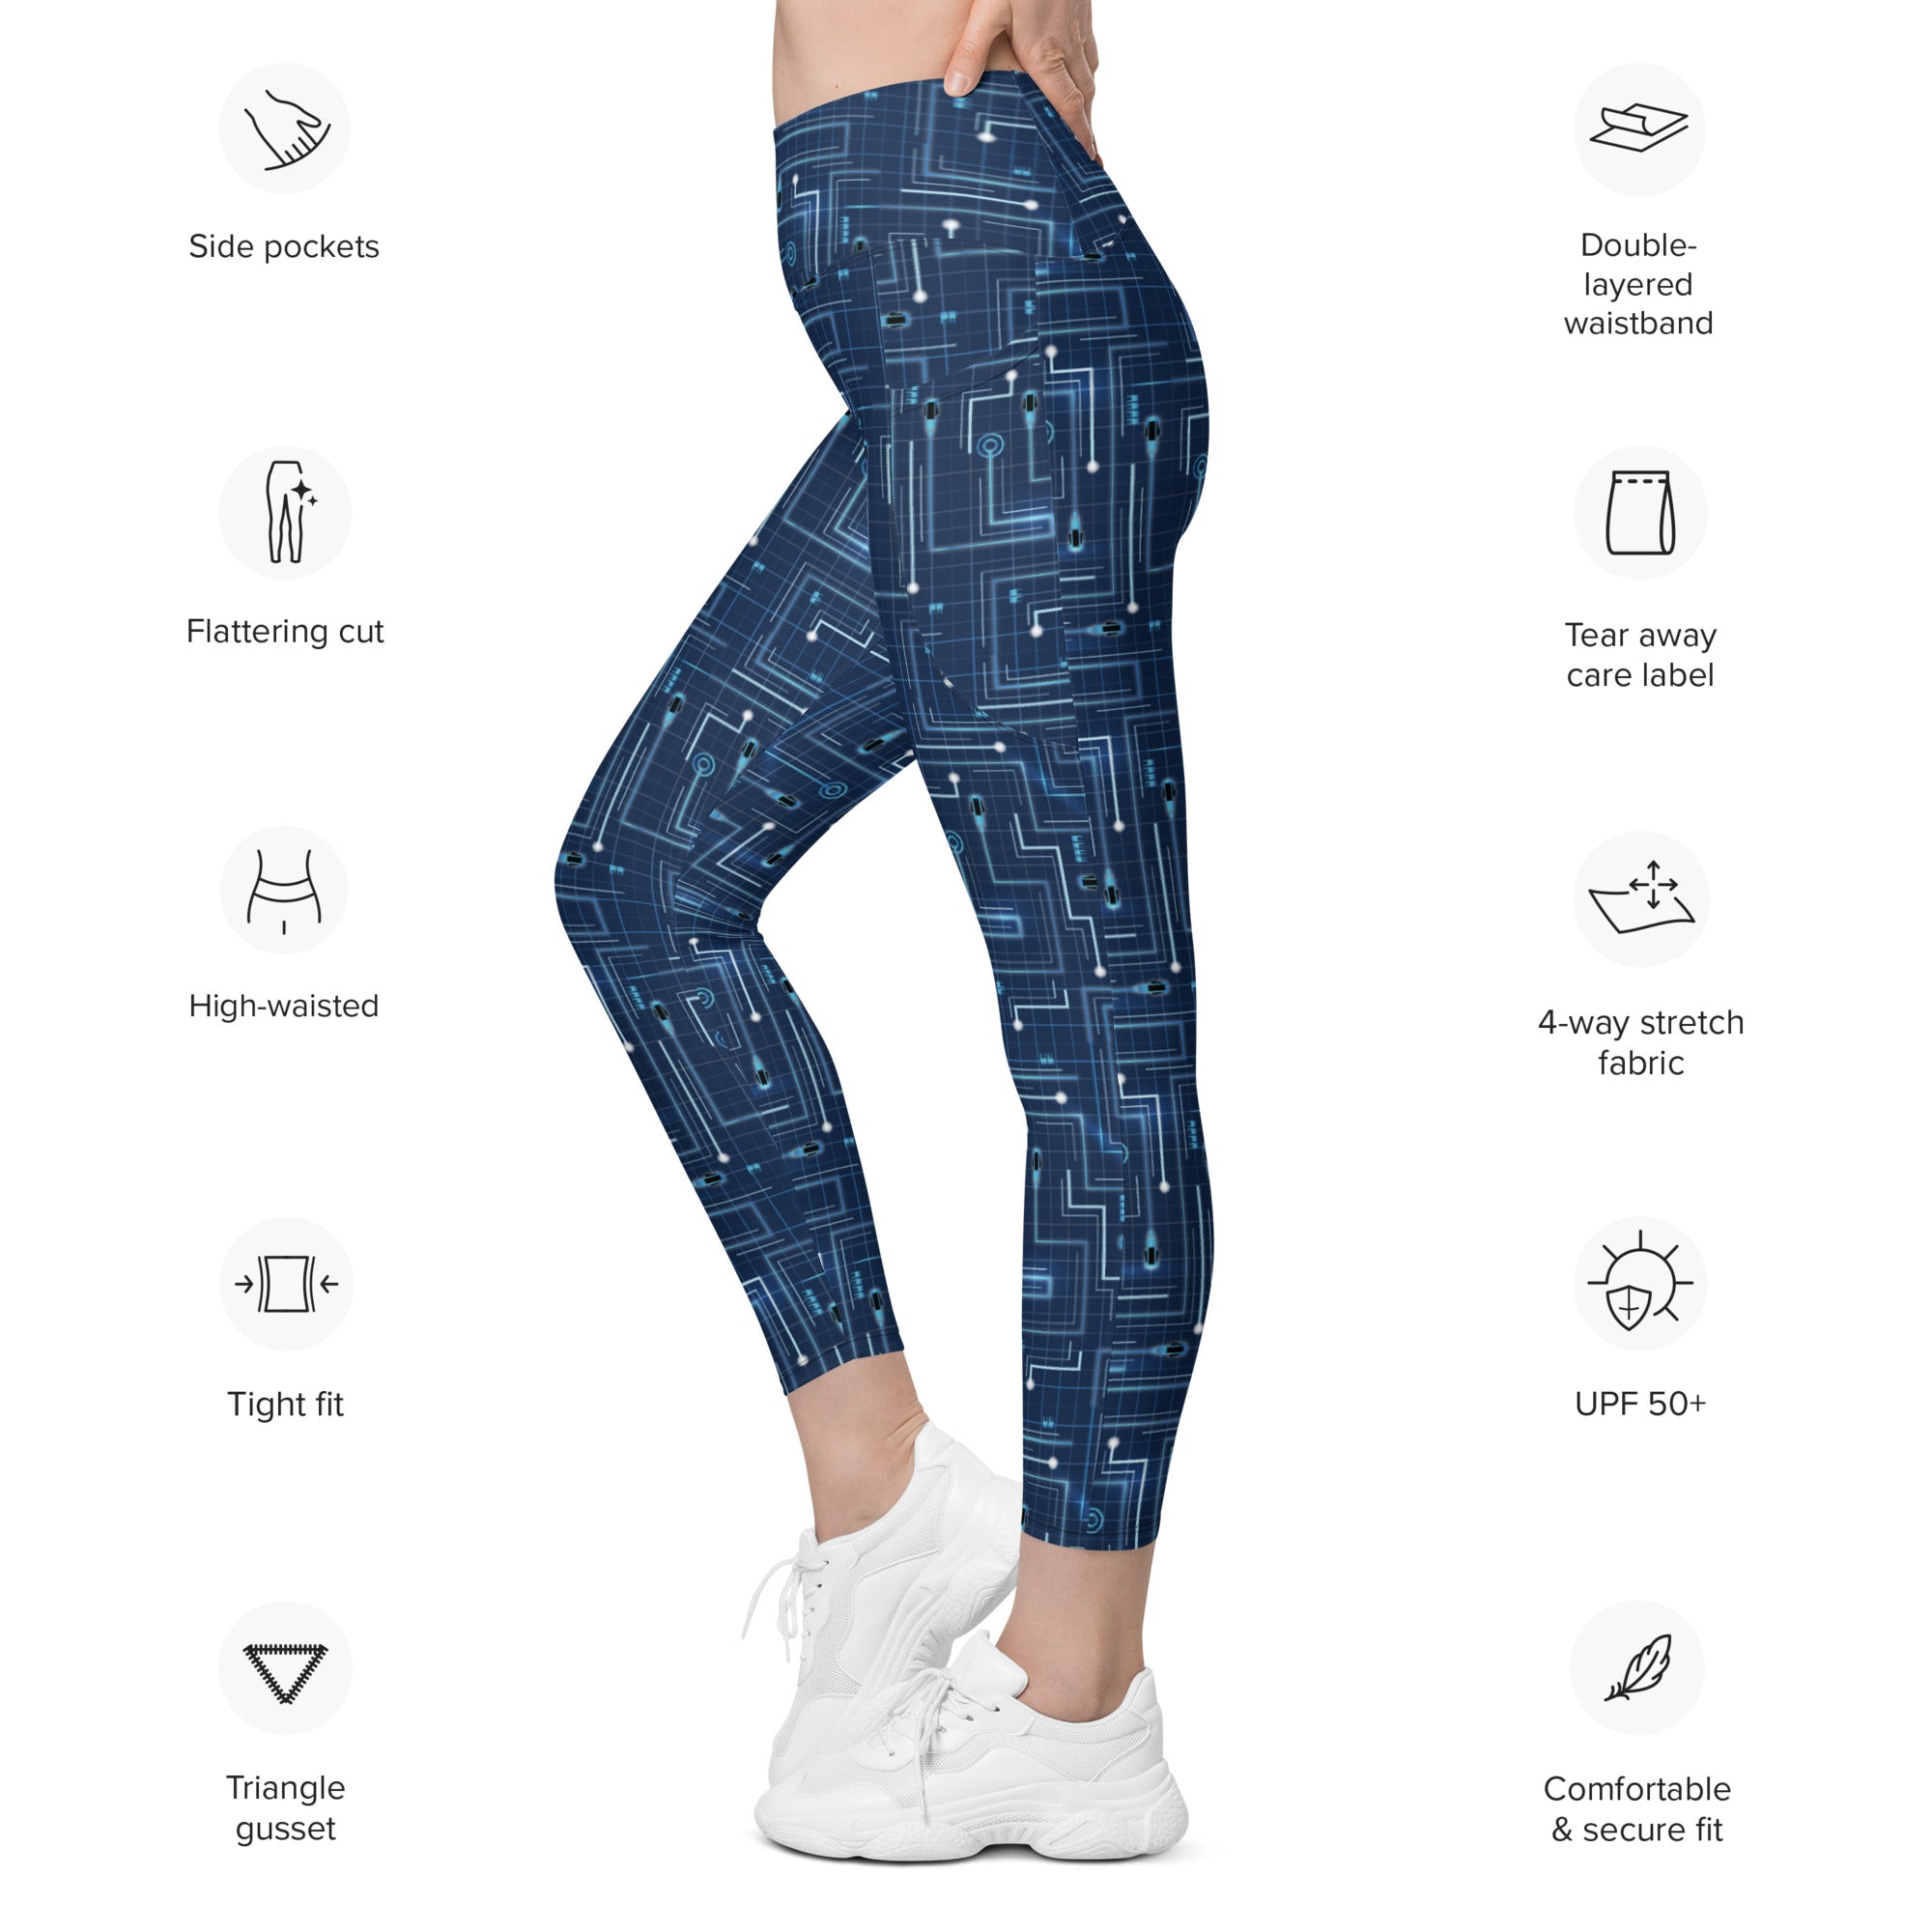 Women's Leggings Pattern With Stretch Fabric, High Waist, Plus